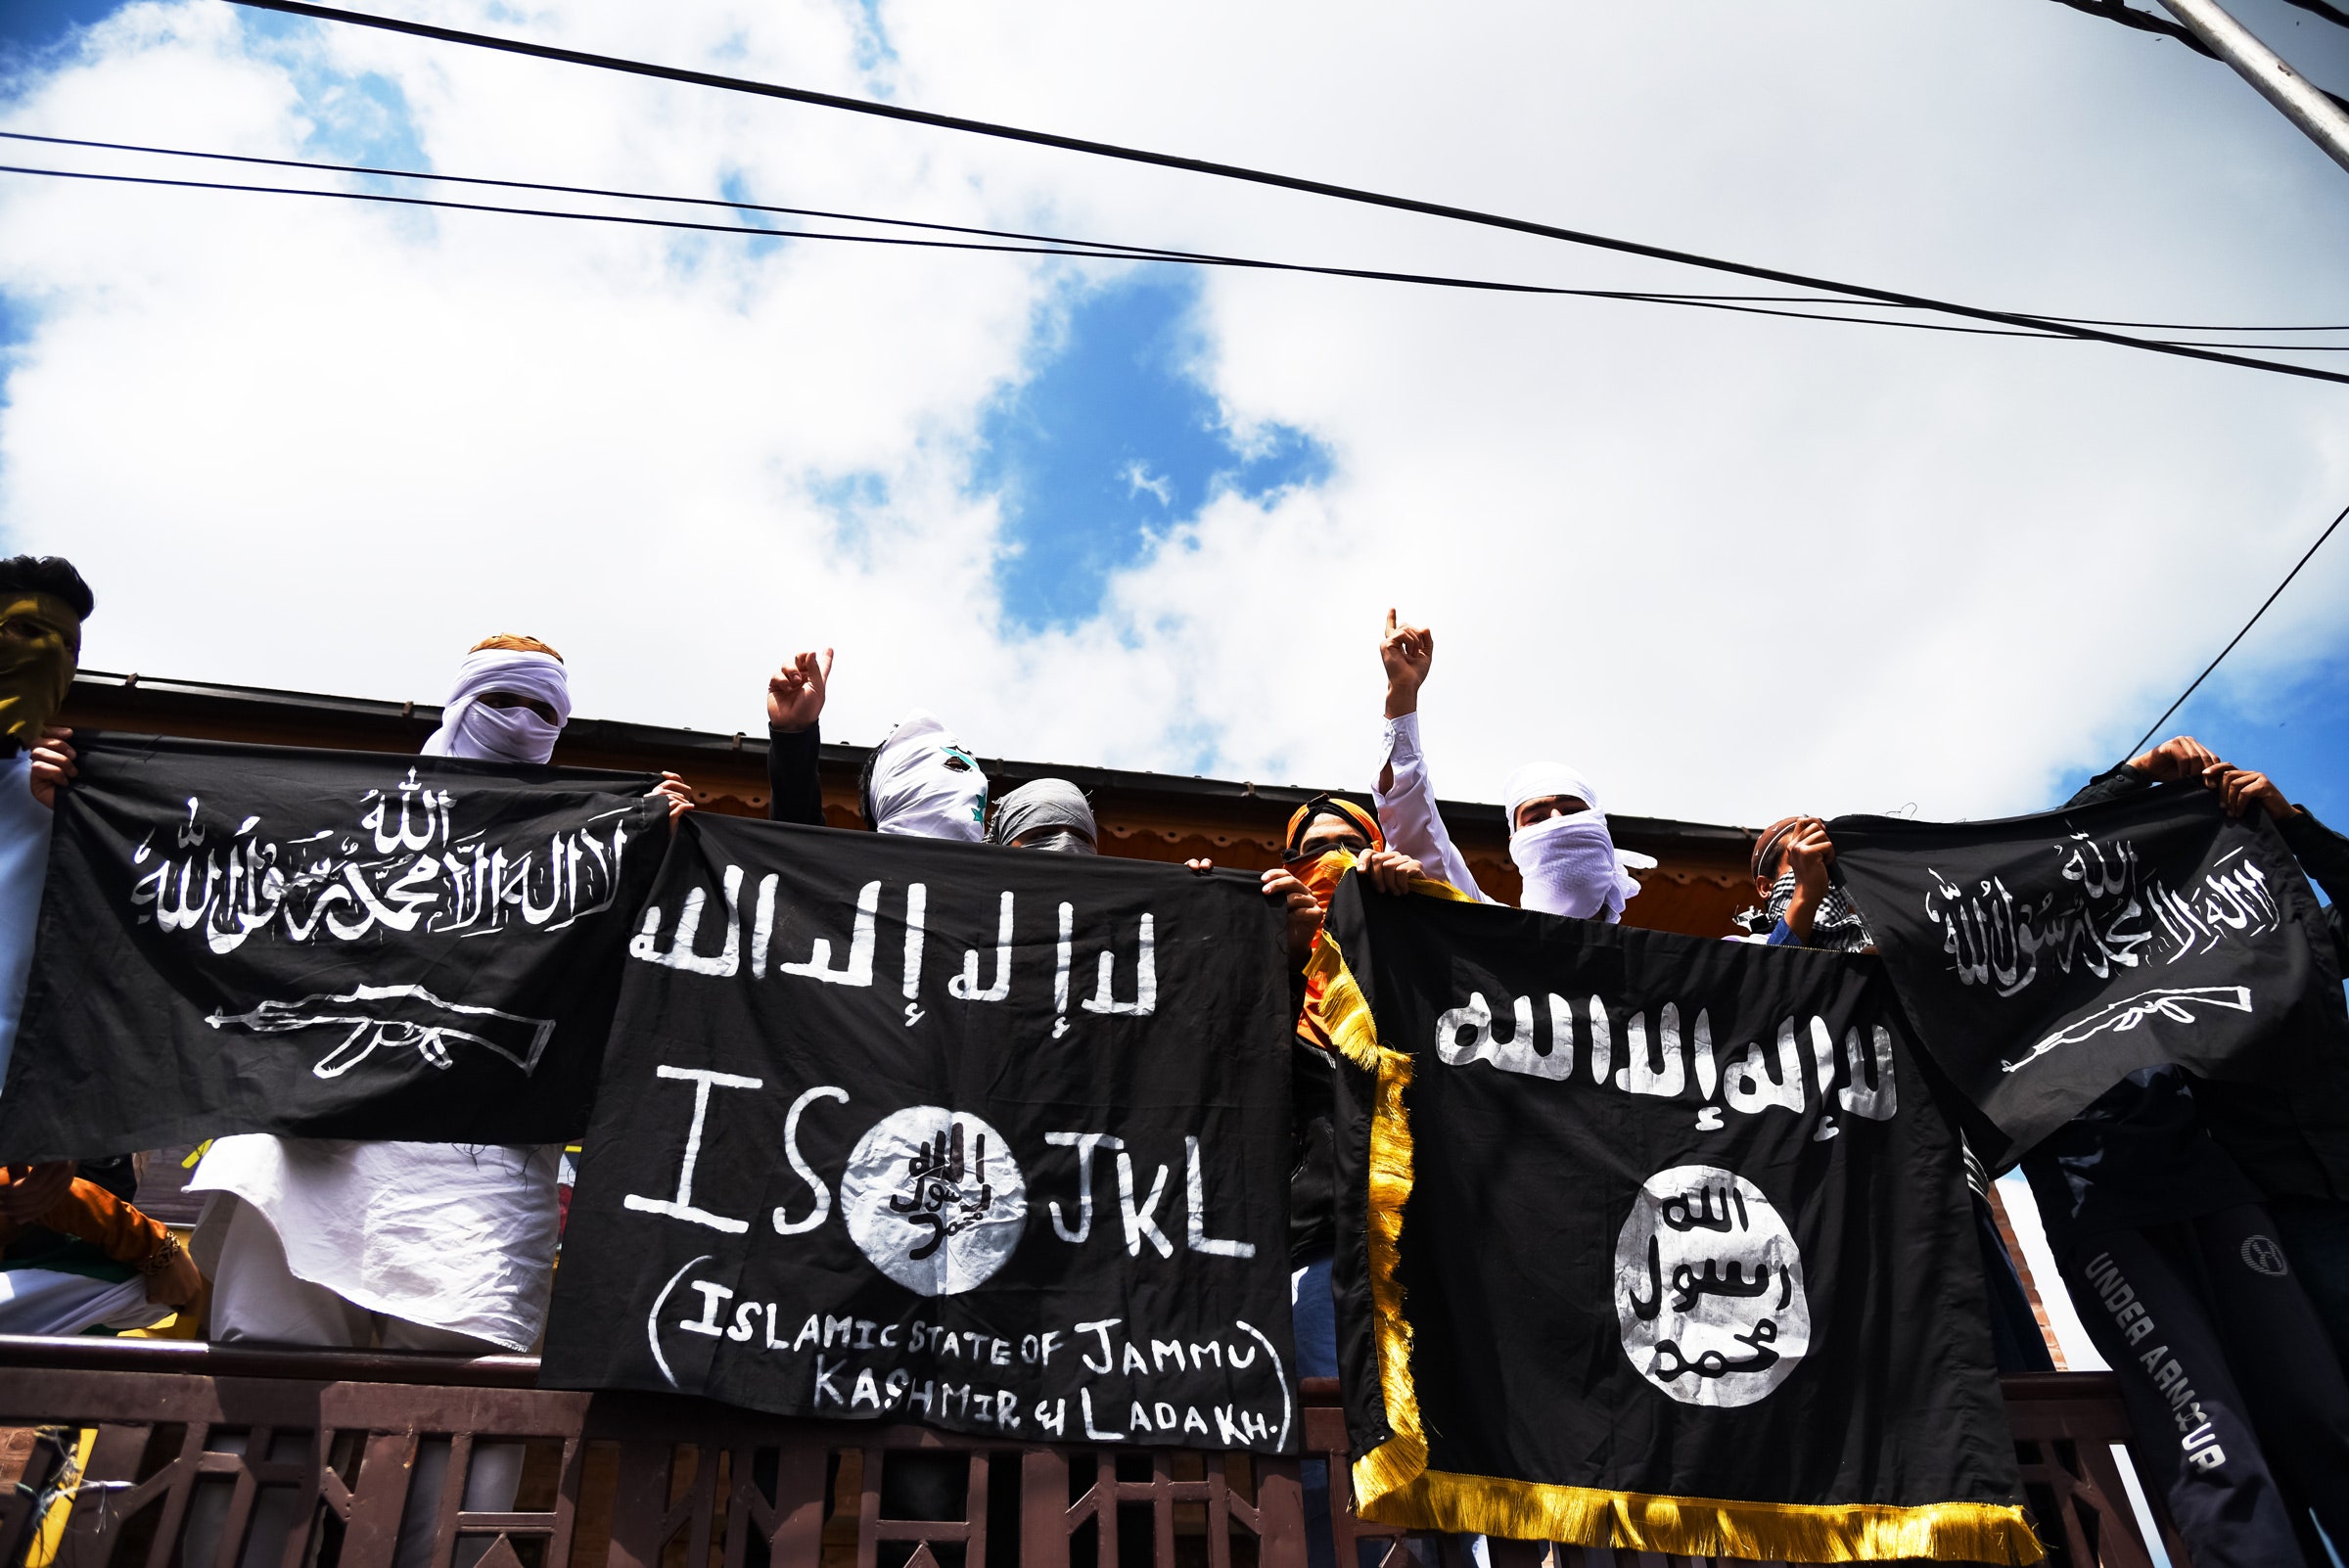 Os manifestantes seguram bandeiras do ISIS